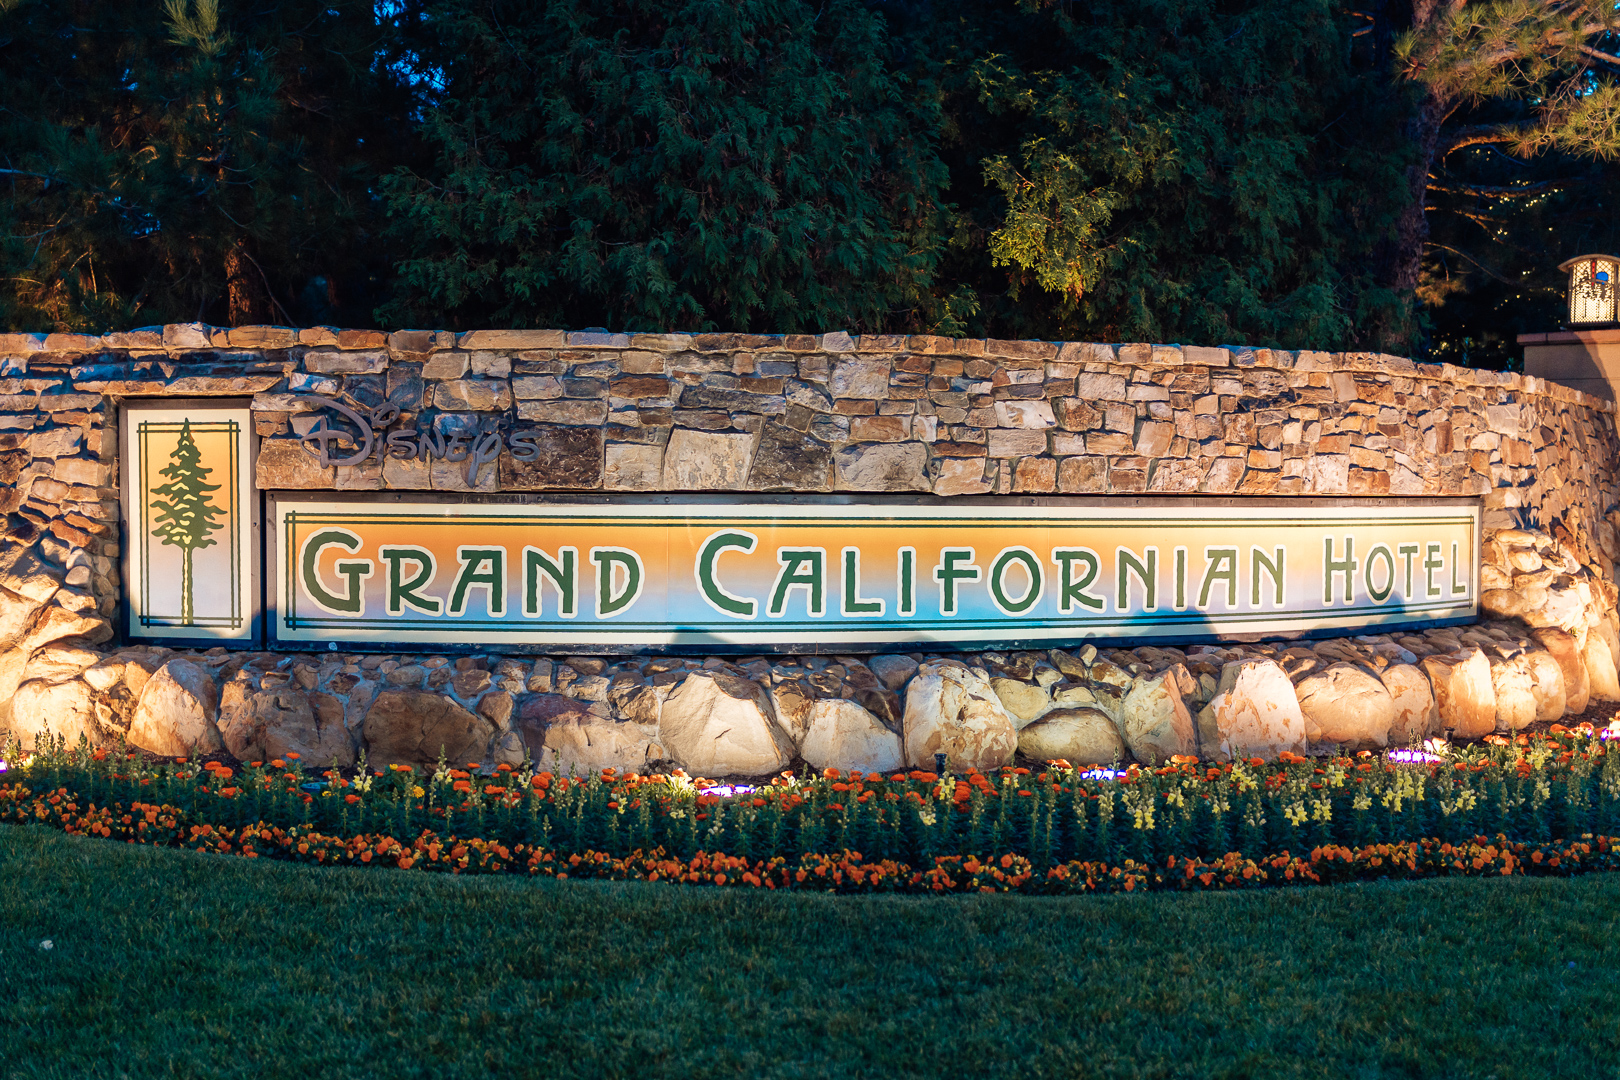 The Grand Californian Hotel